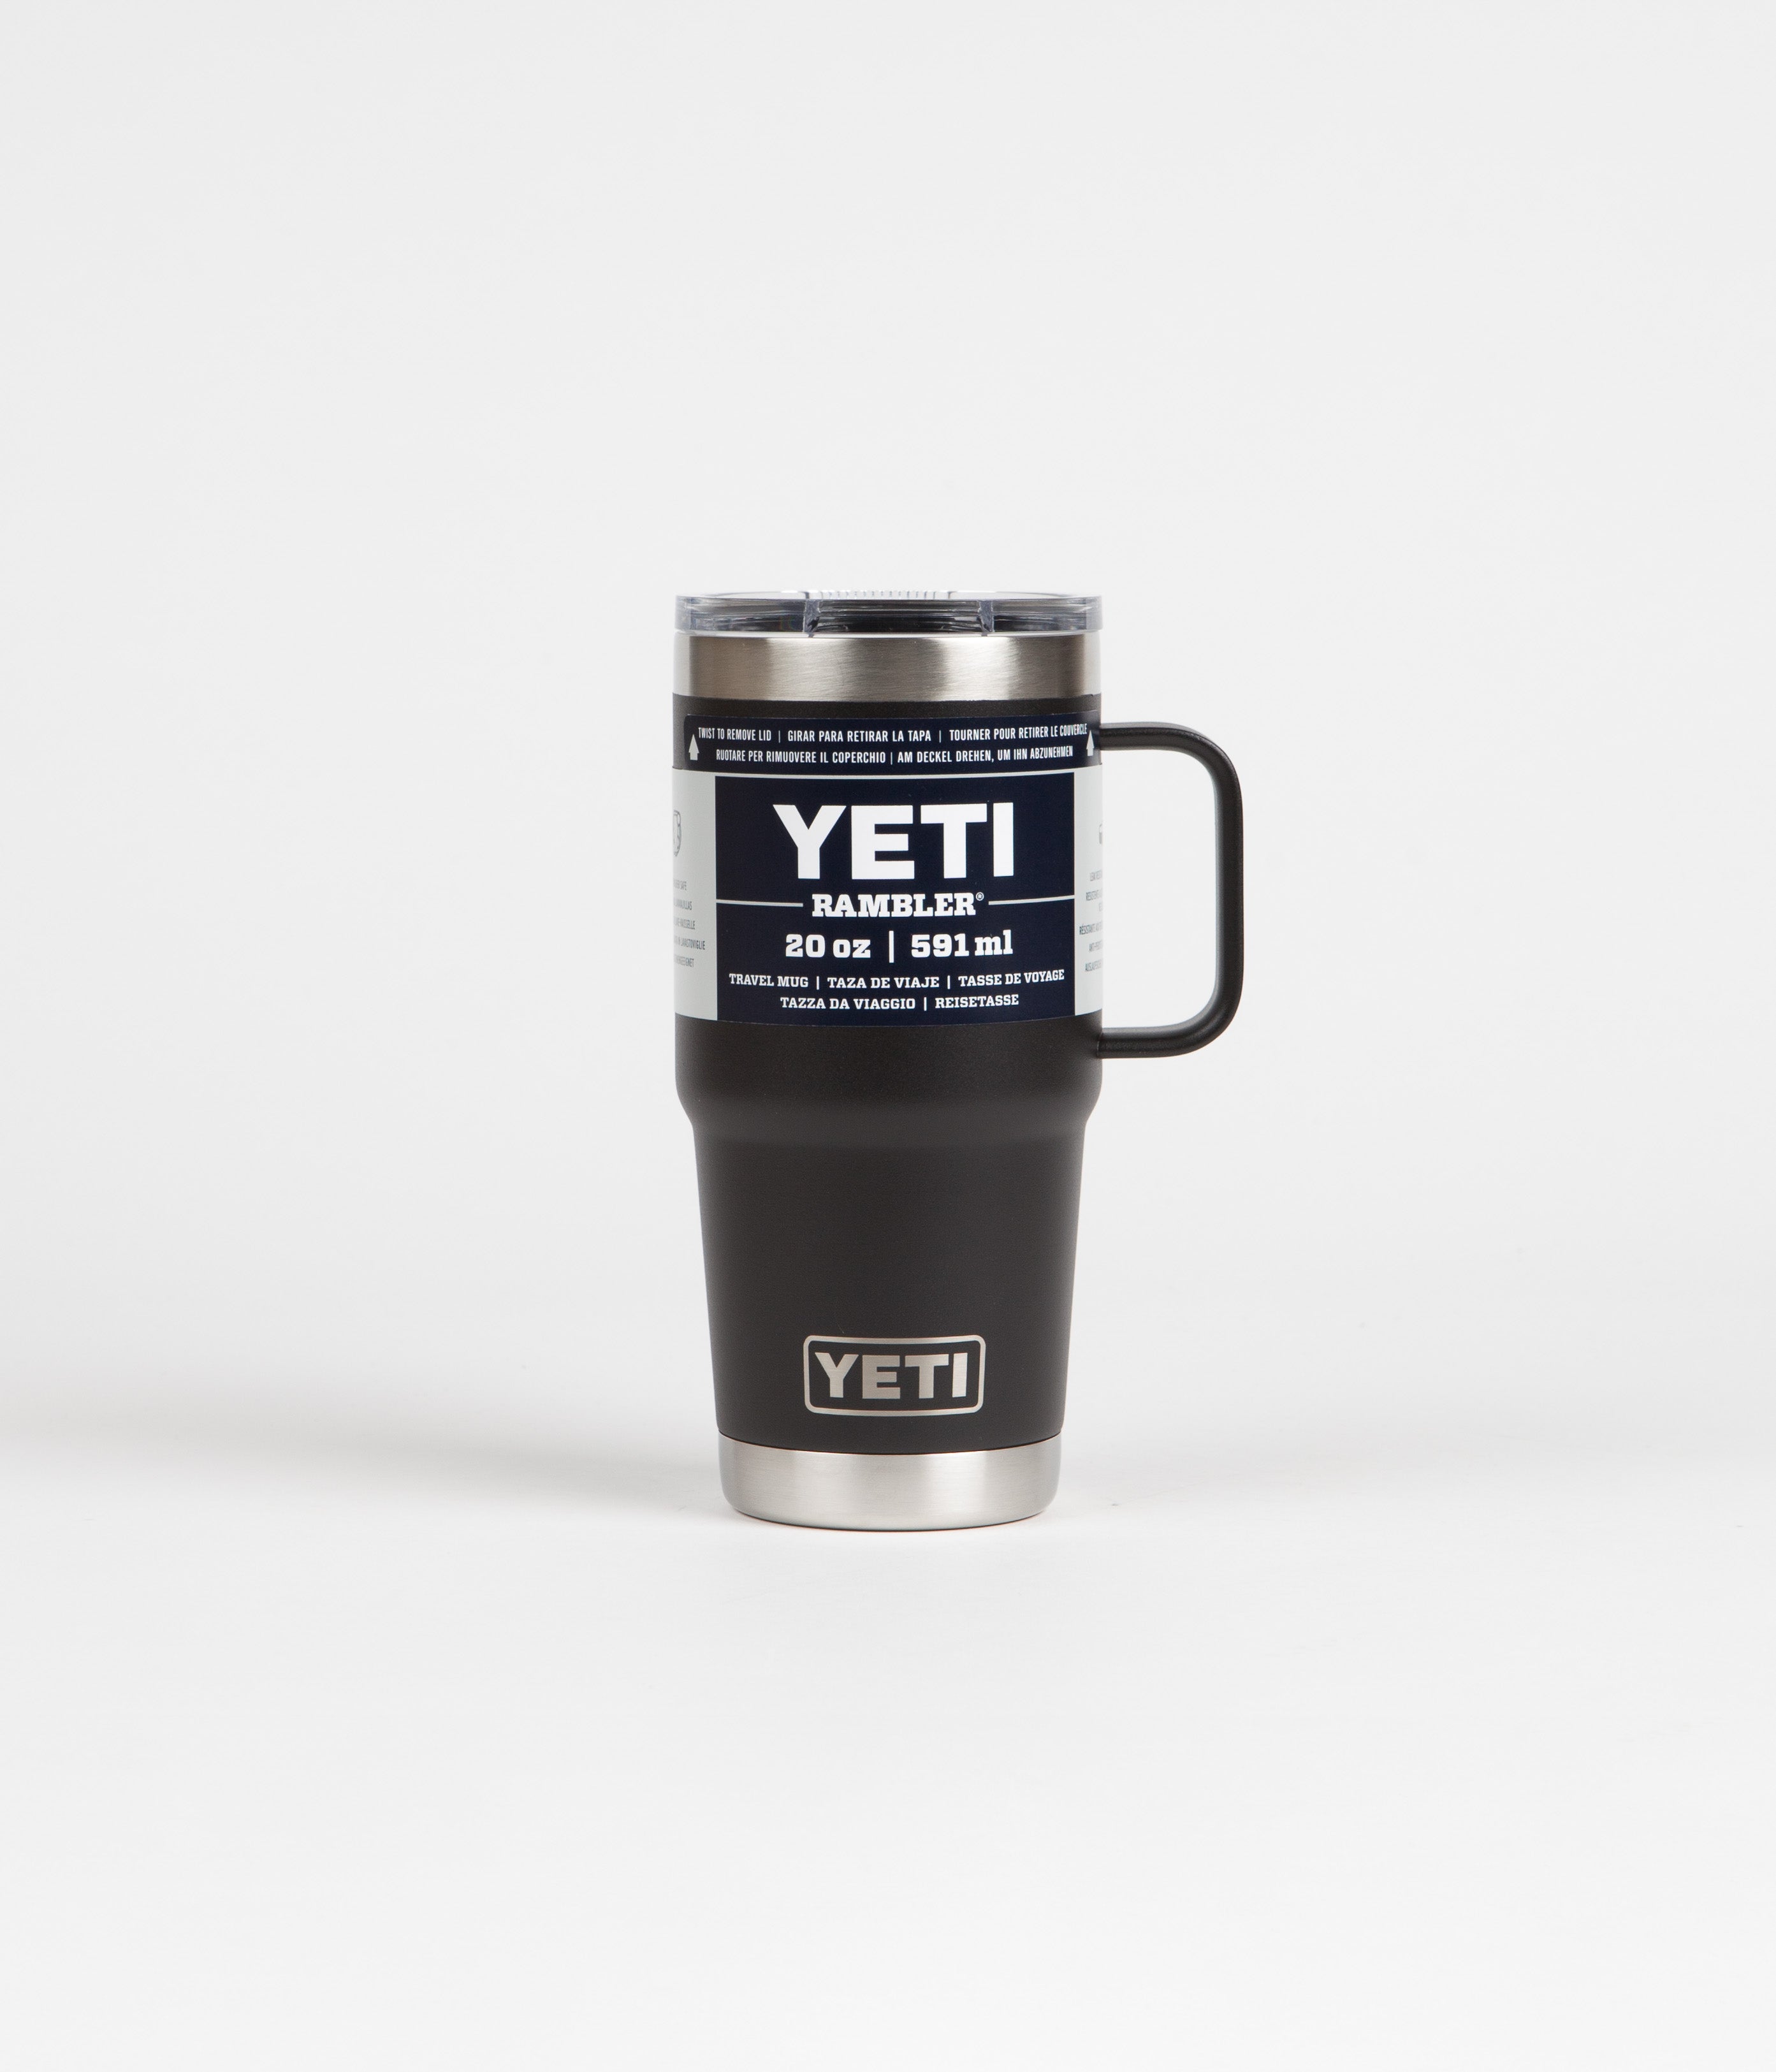 Riteway - Yeti Rambler 20oz Travel Mugs available at